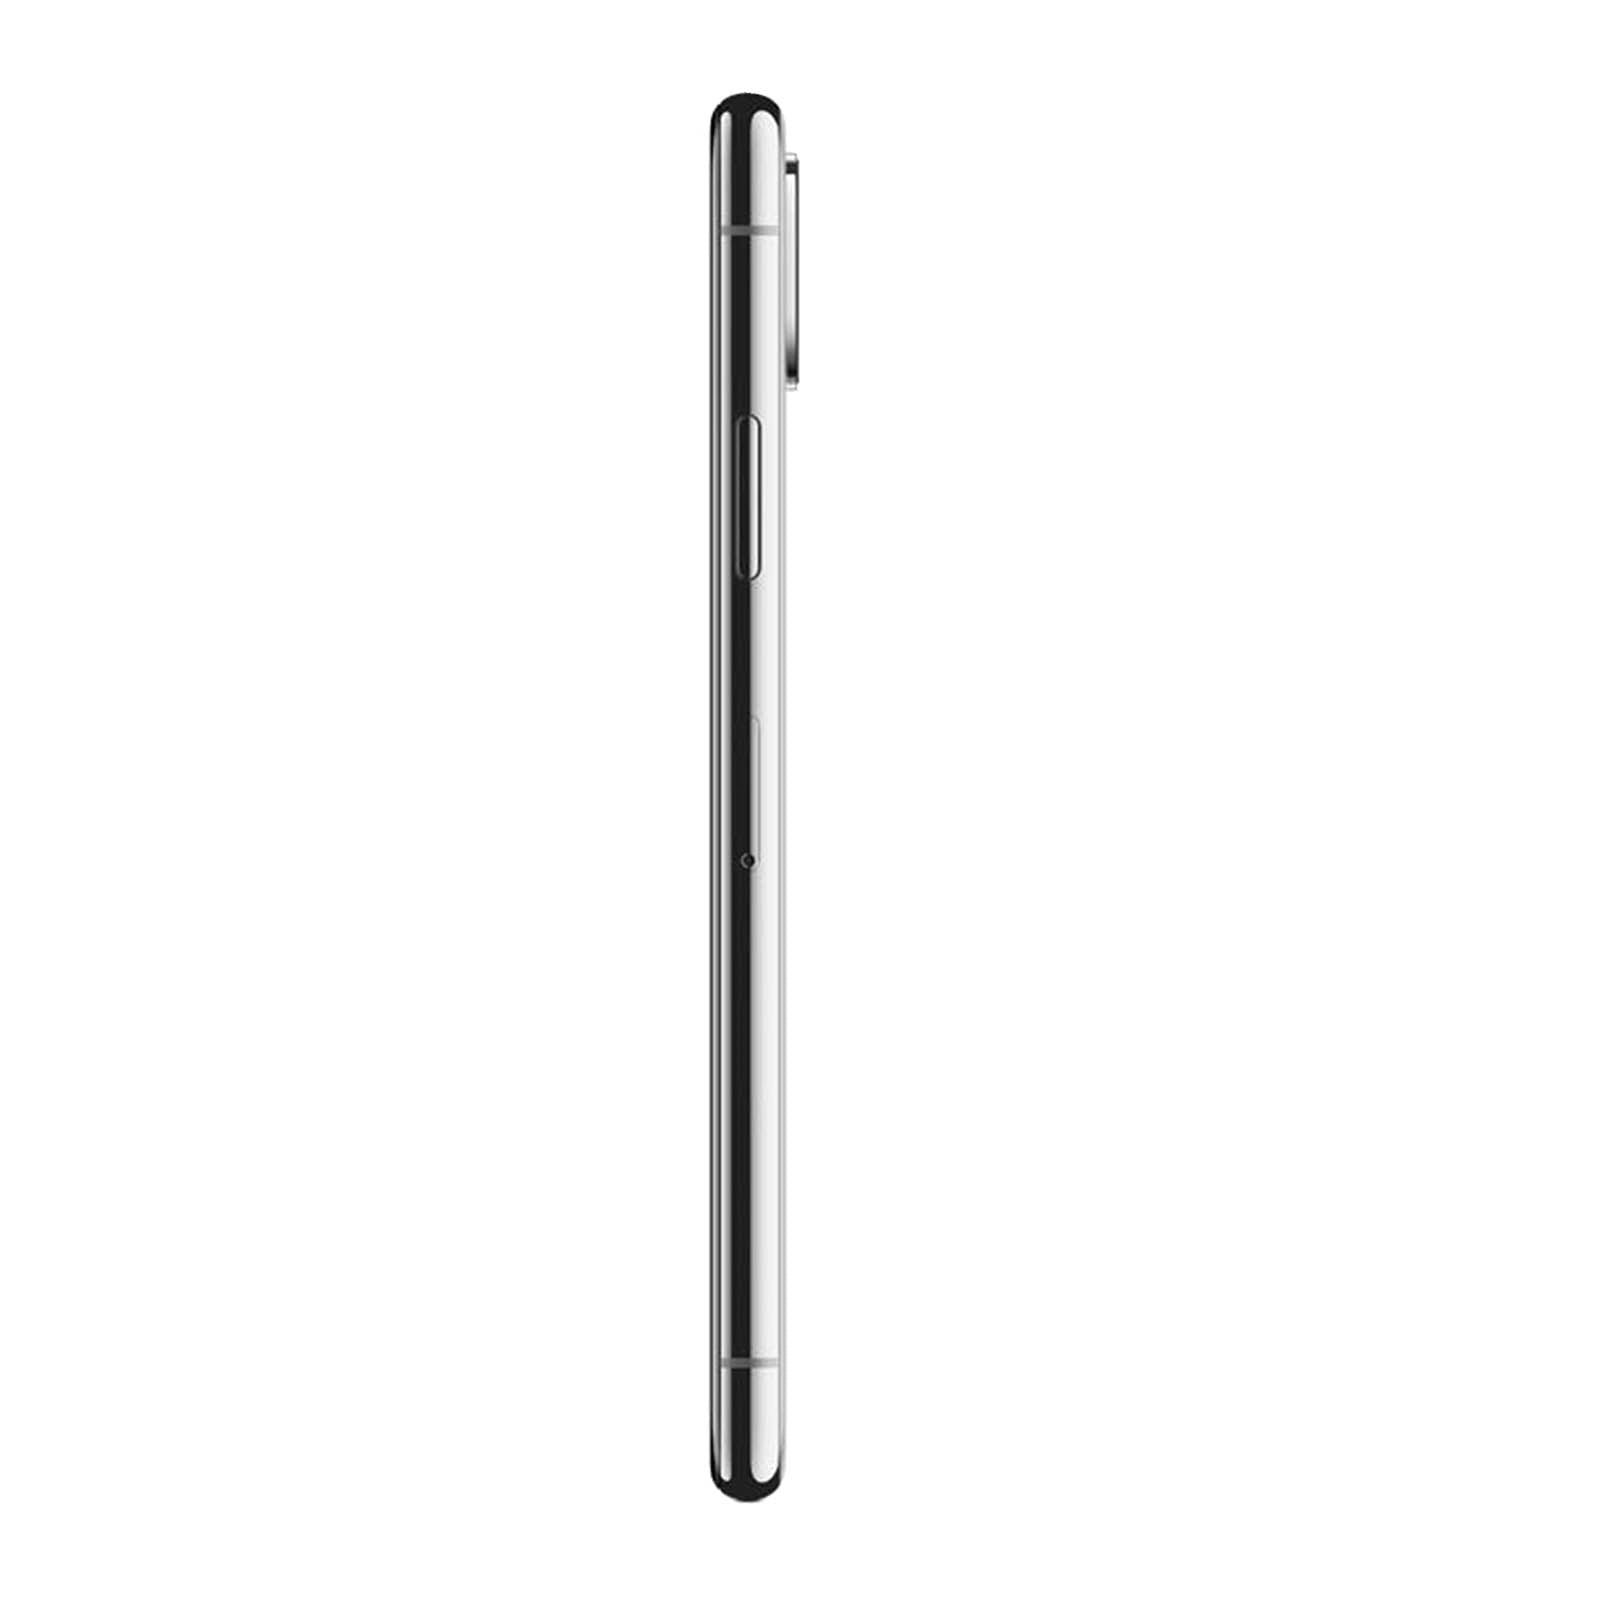 Apple iPhone XS Max 64GB Silver Pristine - Unlocked